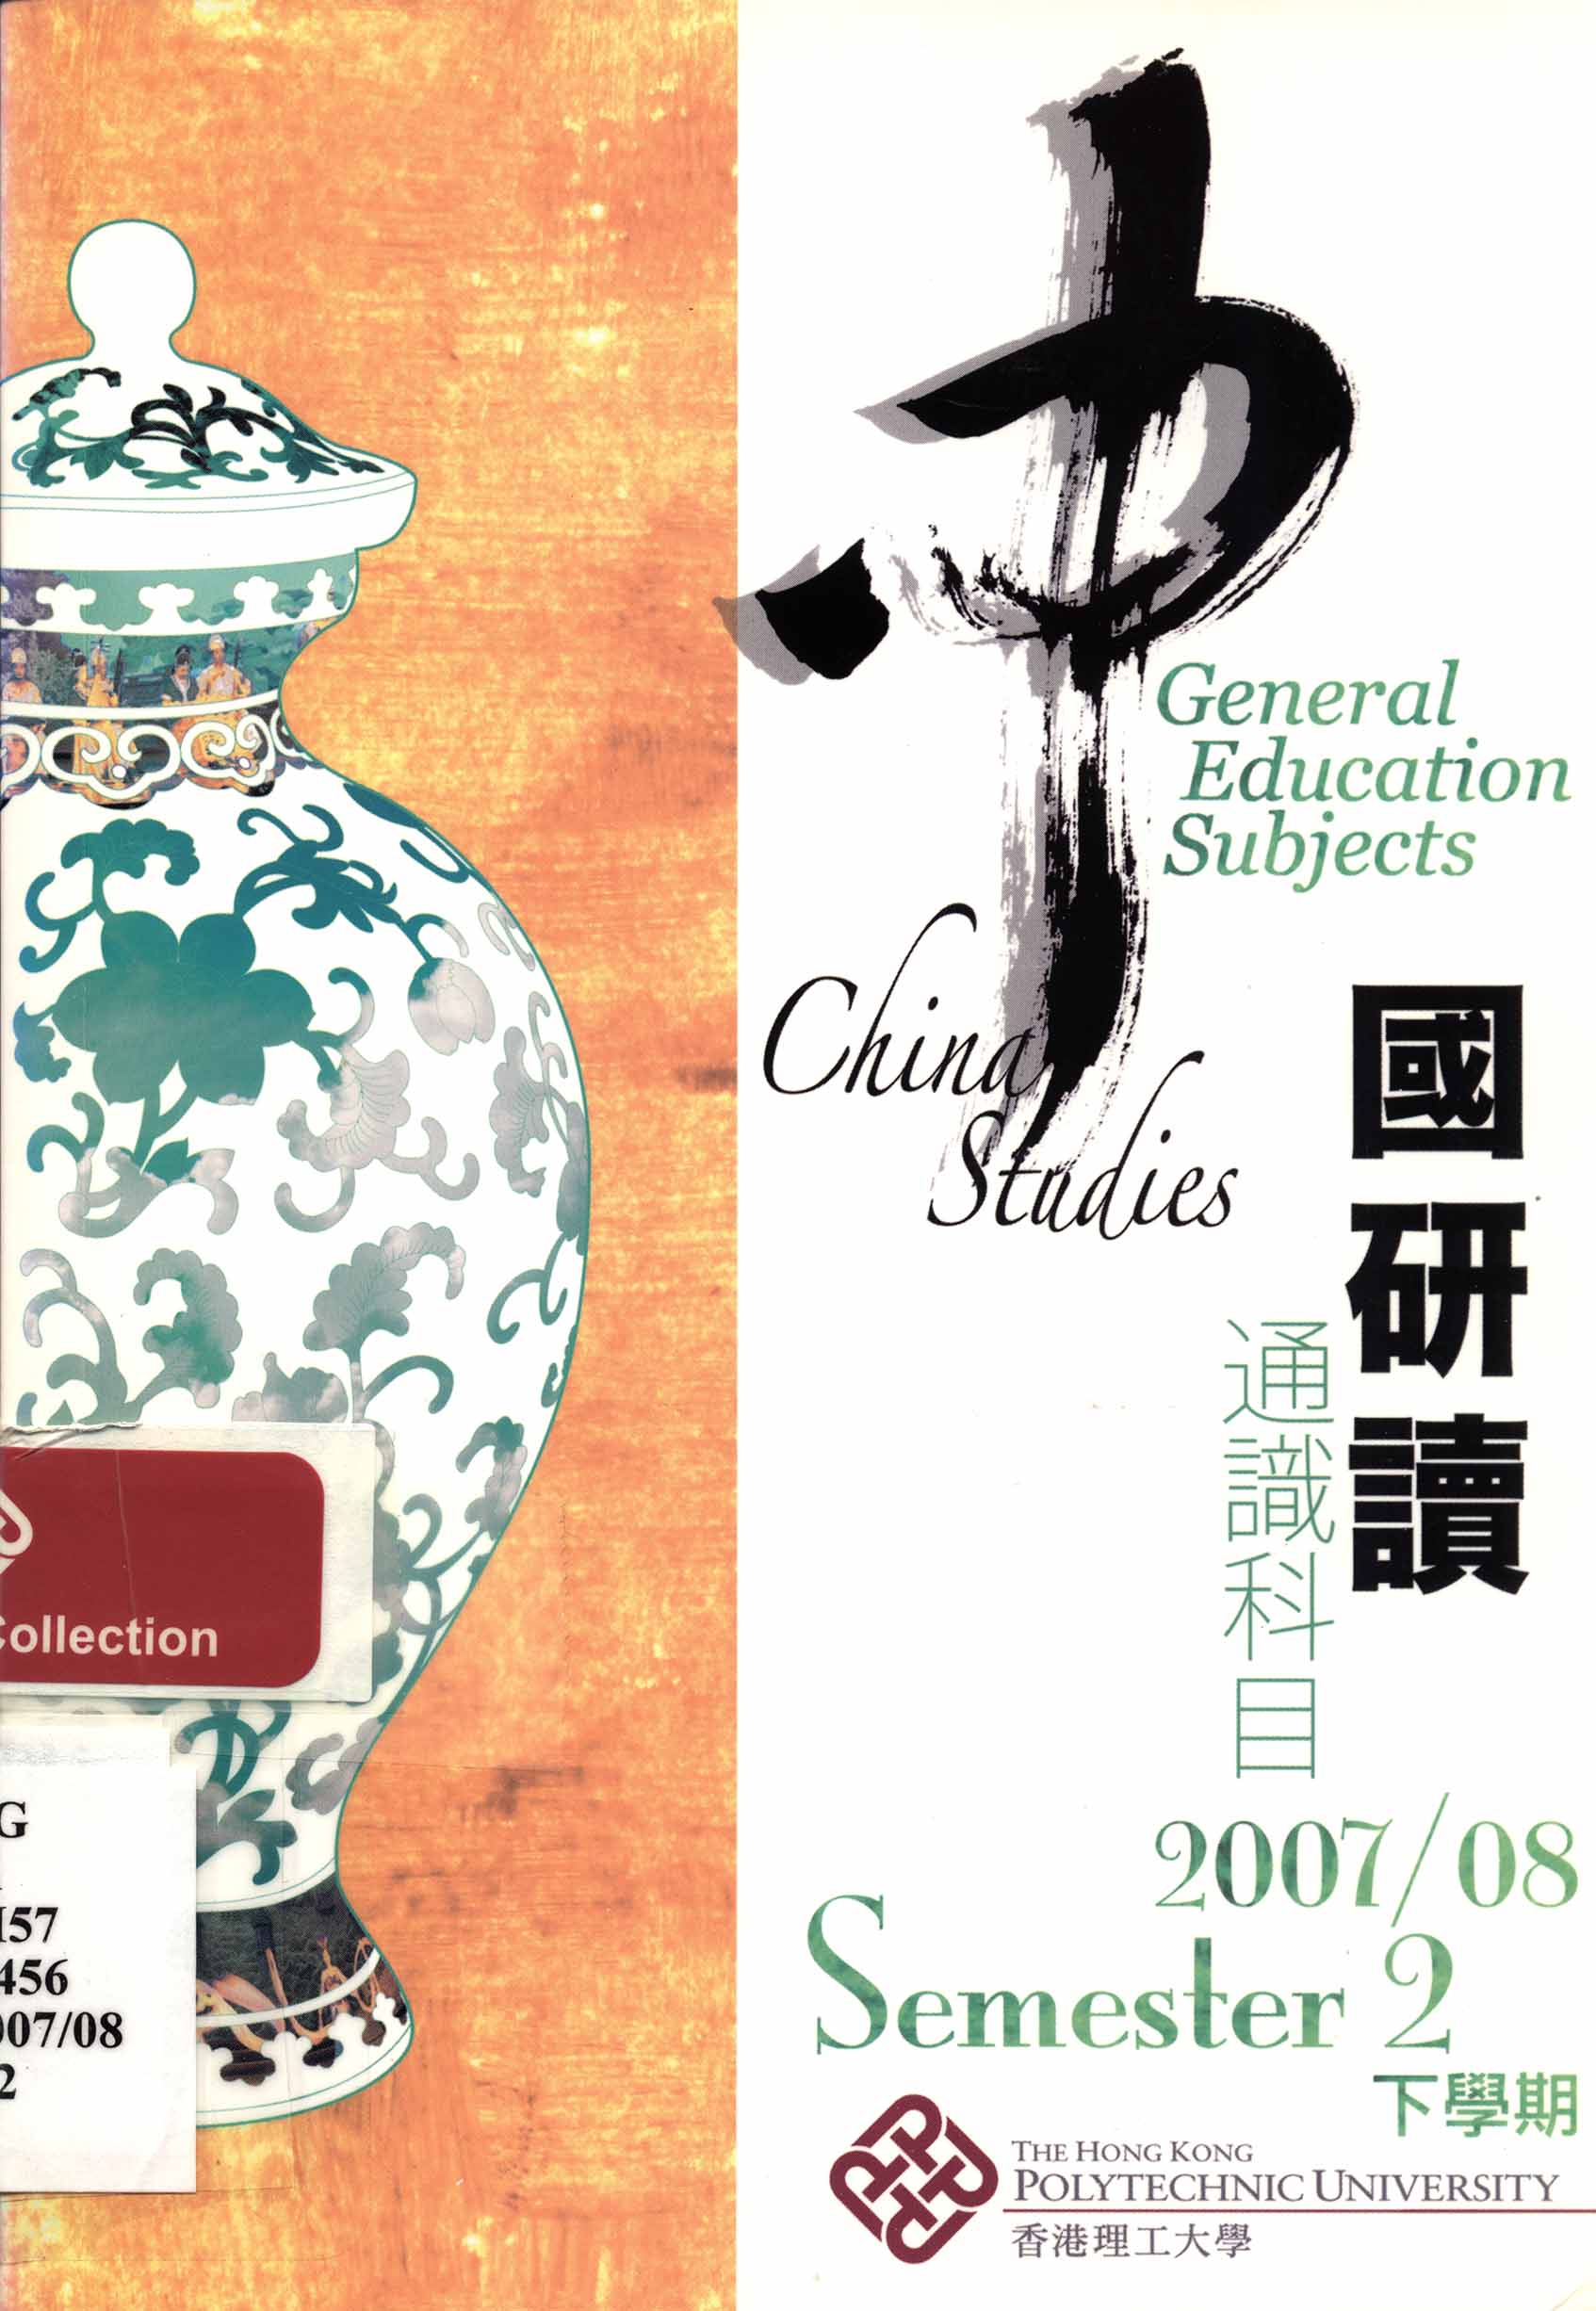 China studies general education subject [Semester 2 of 2007/08]